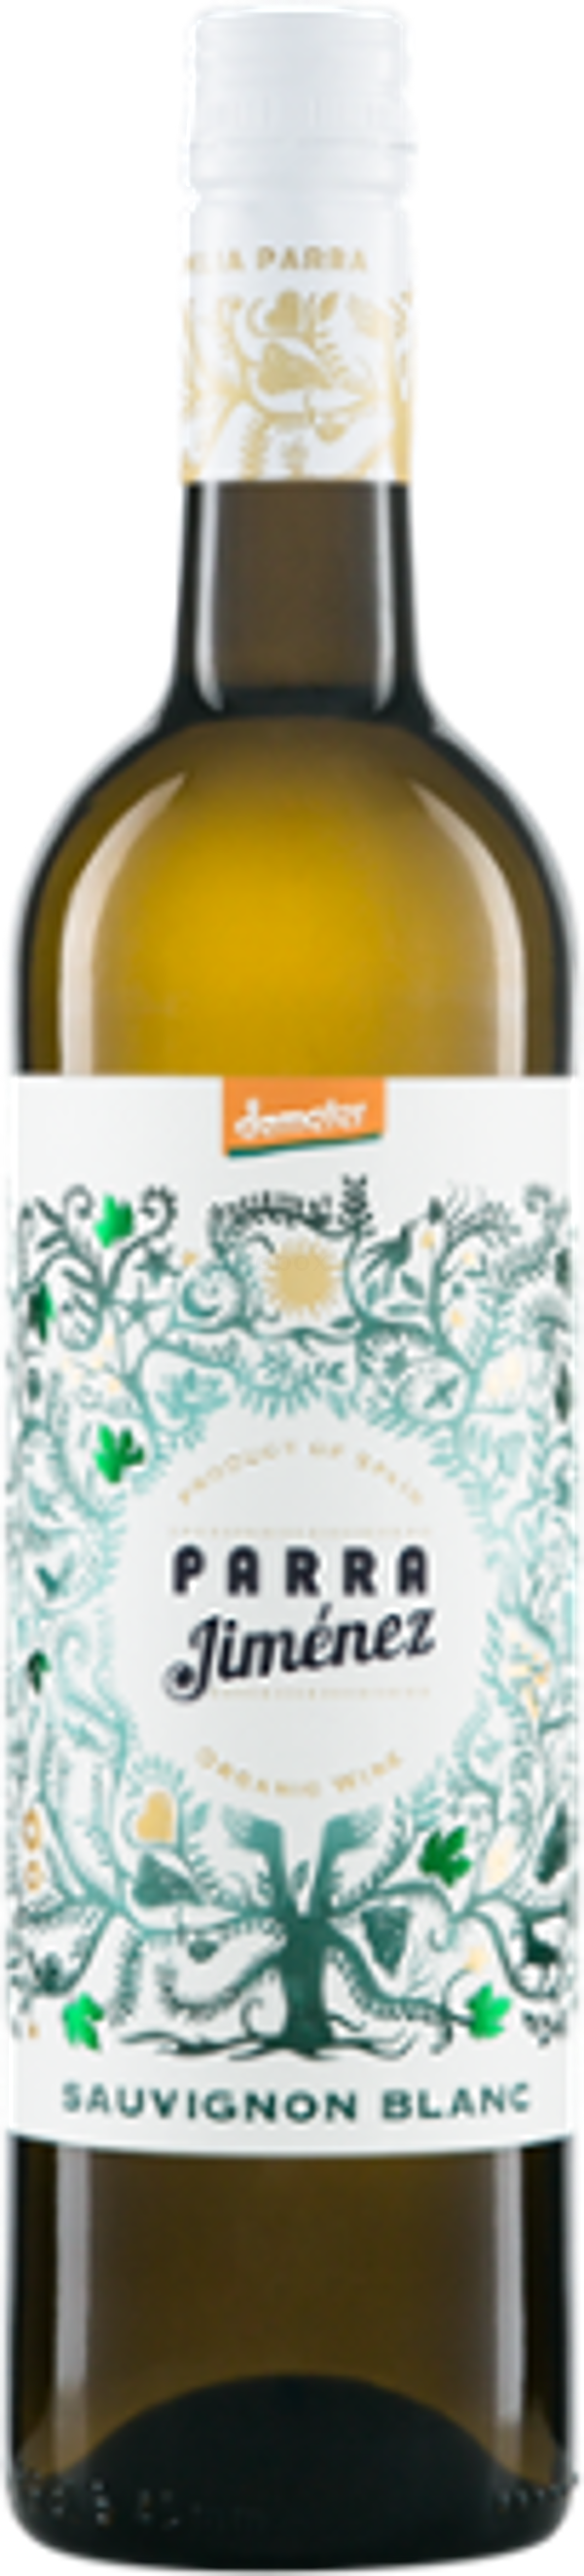 Produktfoto zu Sauvignon Blanc PARRA 2022_202